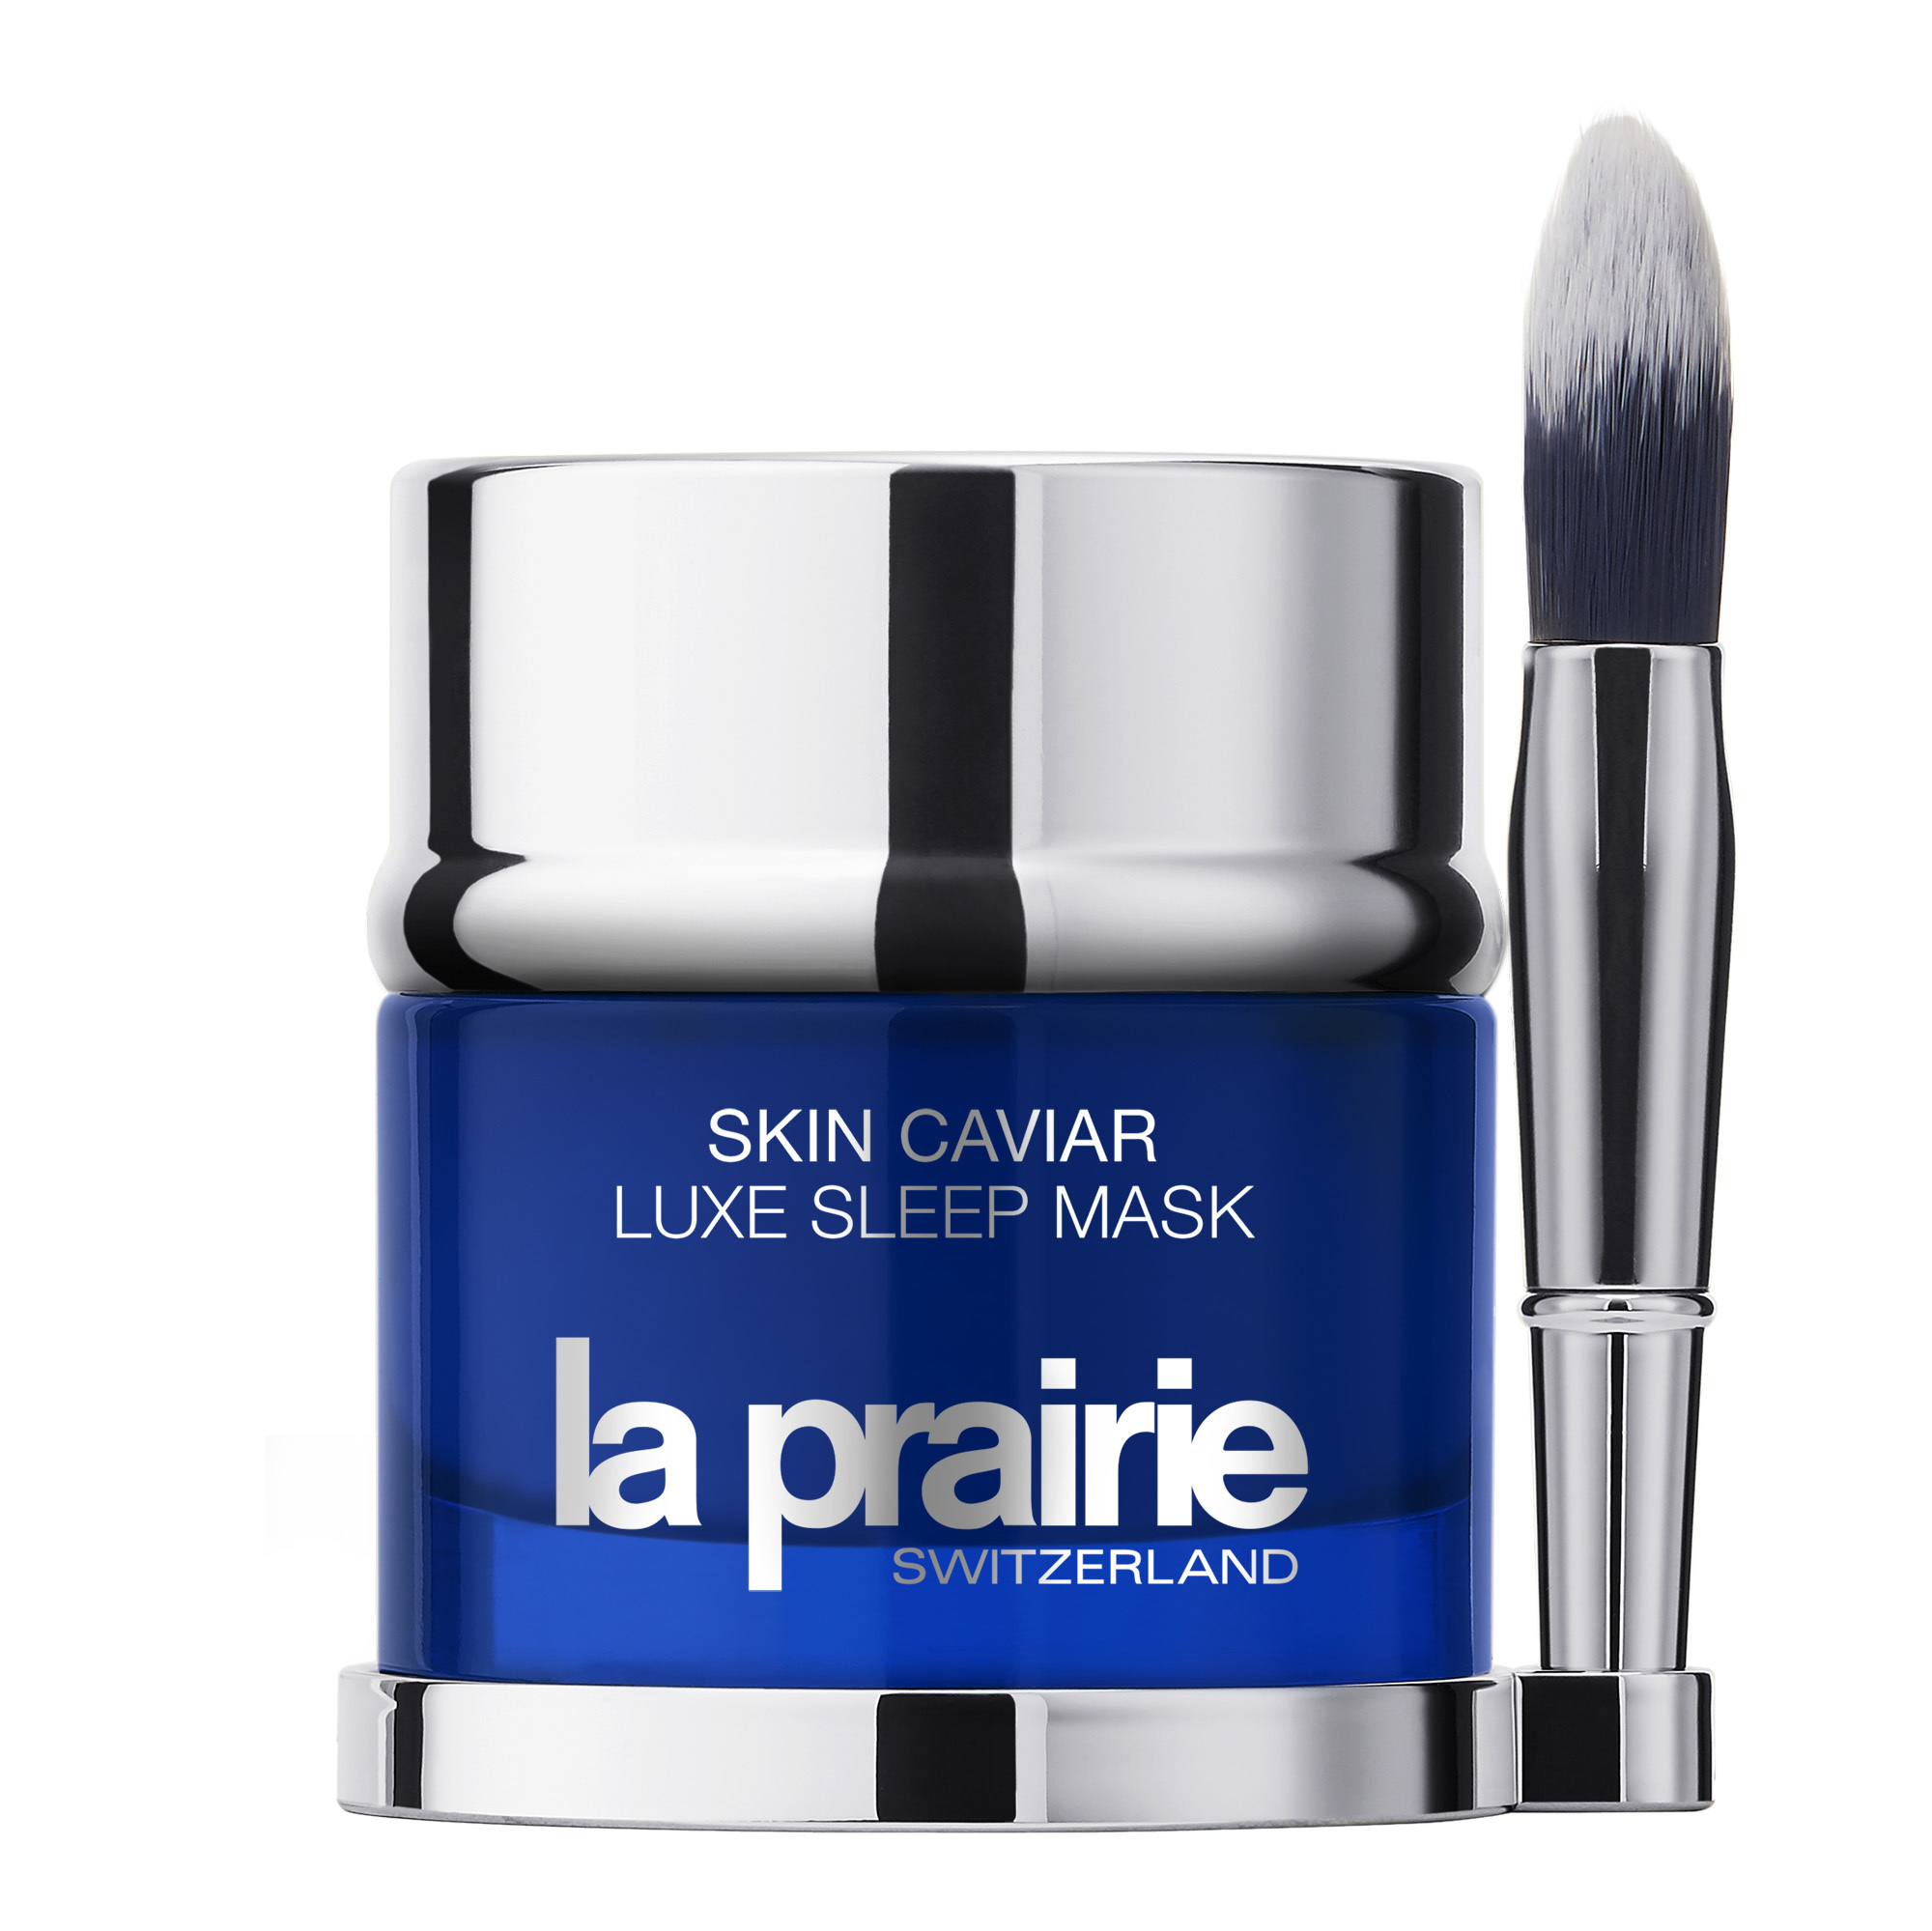 Skin Caviar Luxe Sleep Mask de La Prairie.